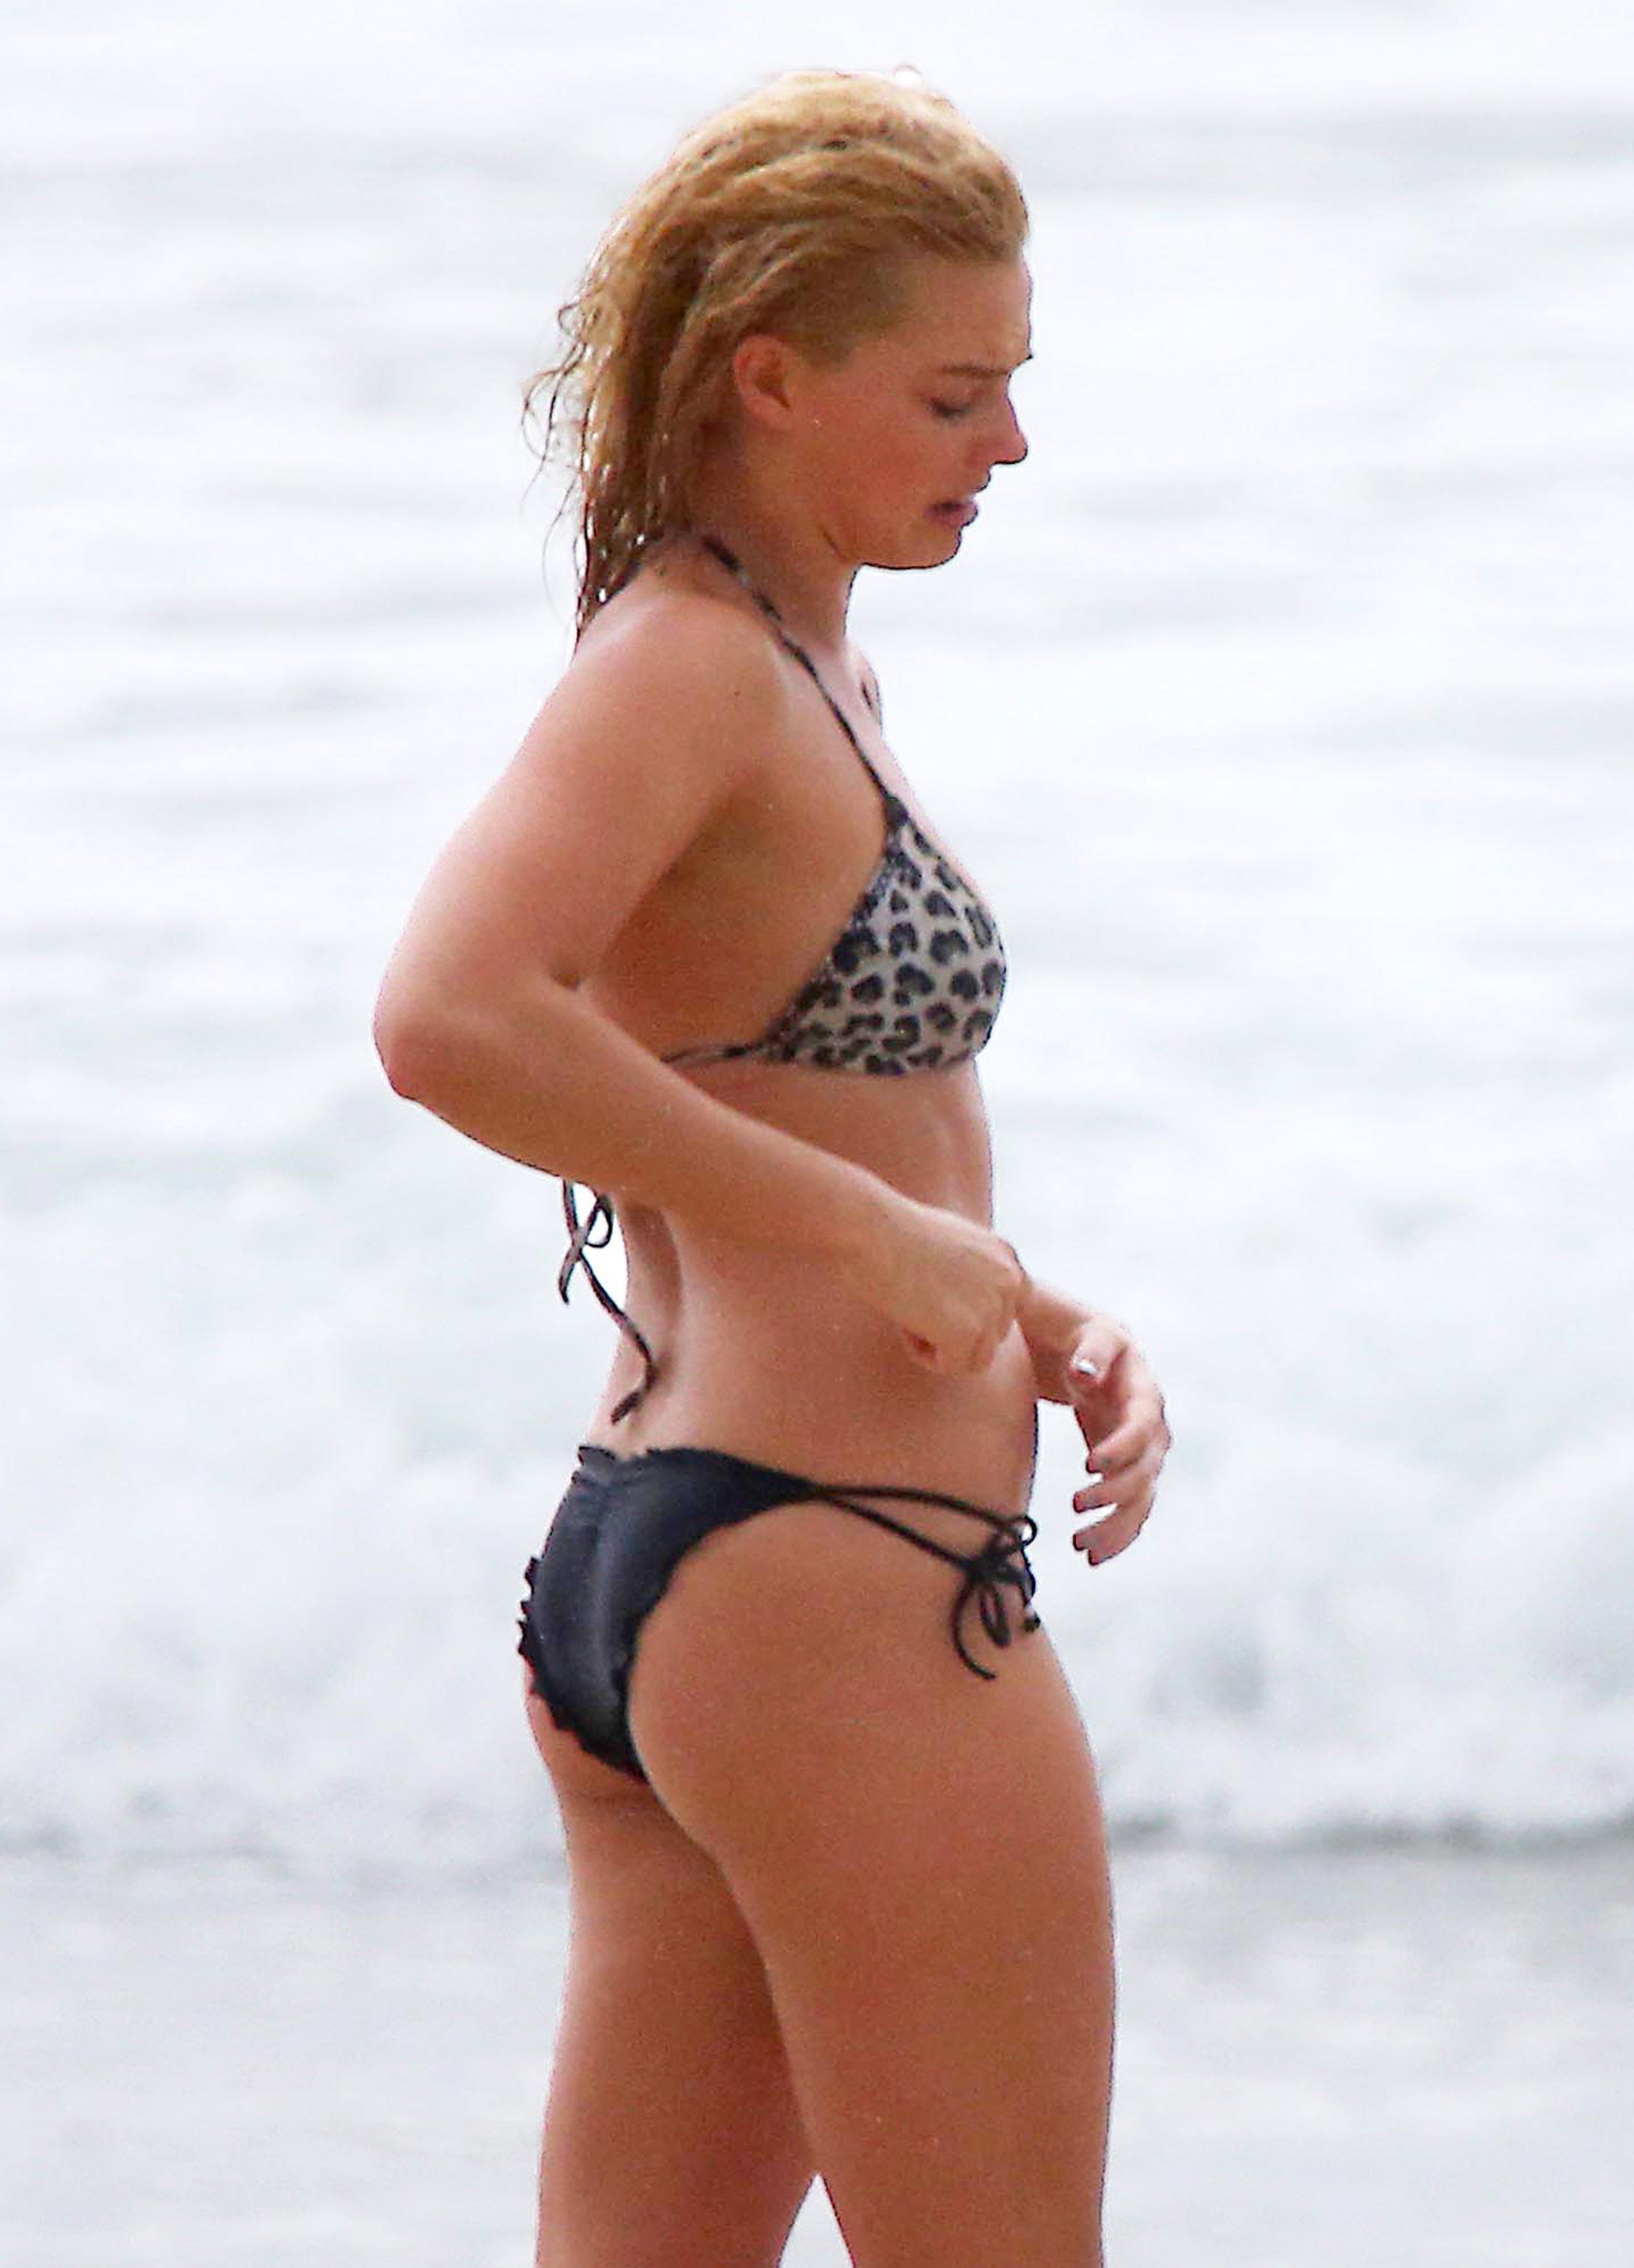 Margot_Robbie_wearing_sexy_bikini_at_a_beach_in_Byron_Bay_79x_HQ_6.jpg